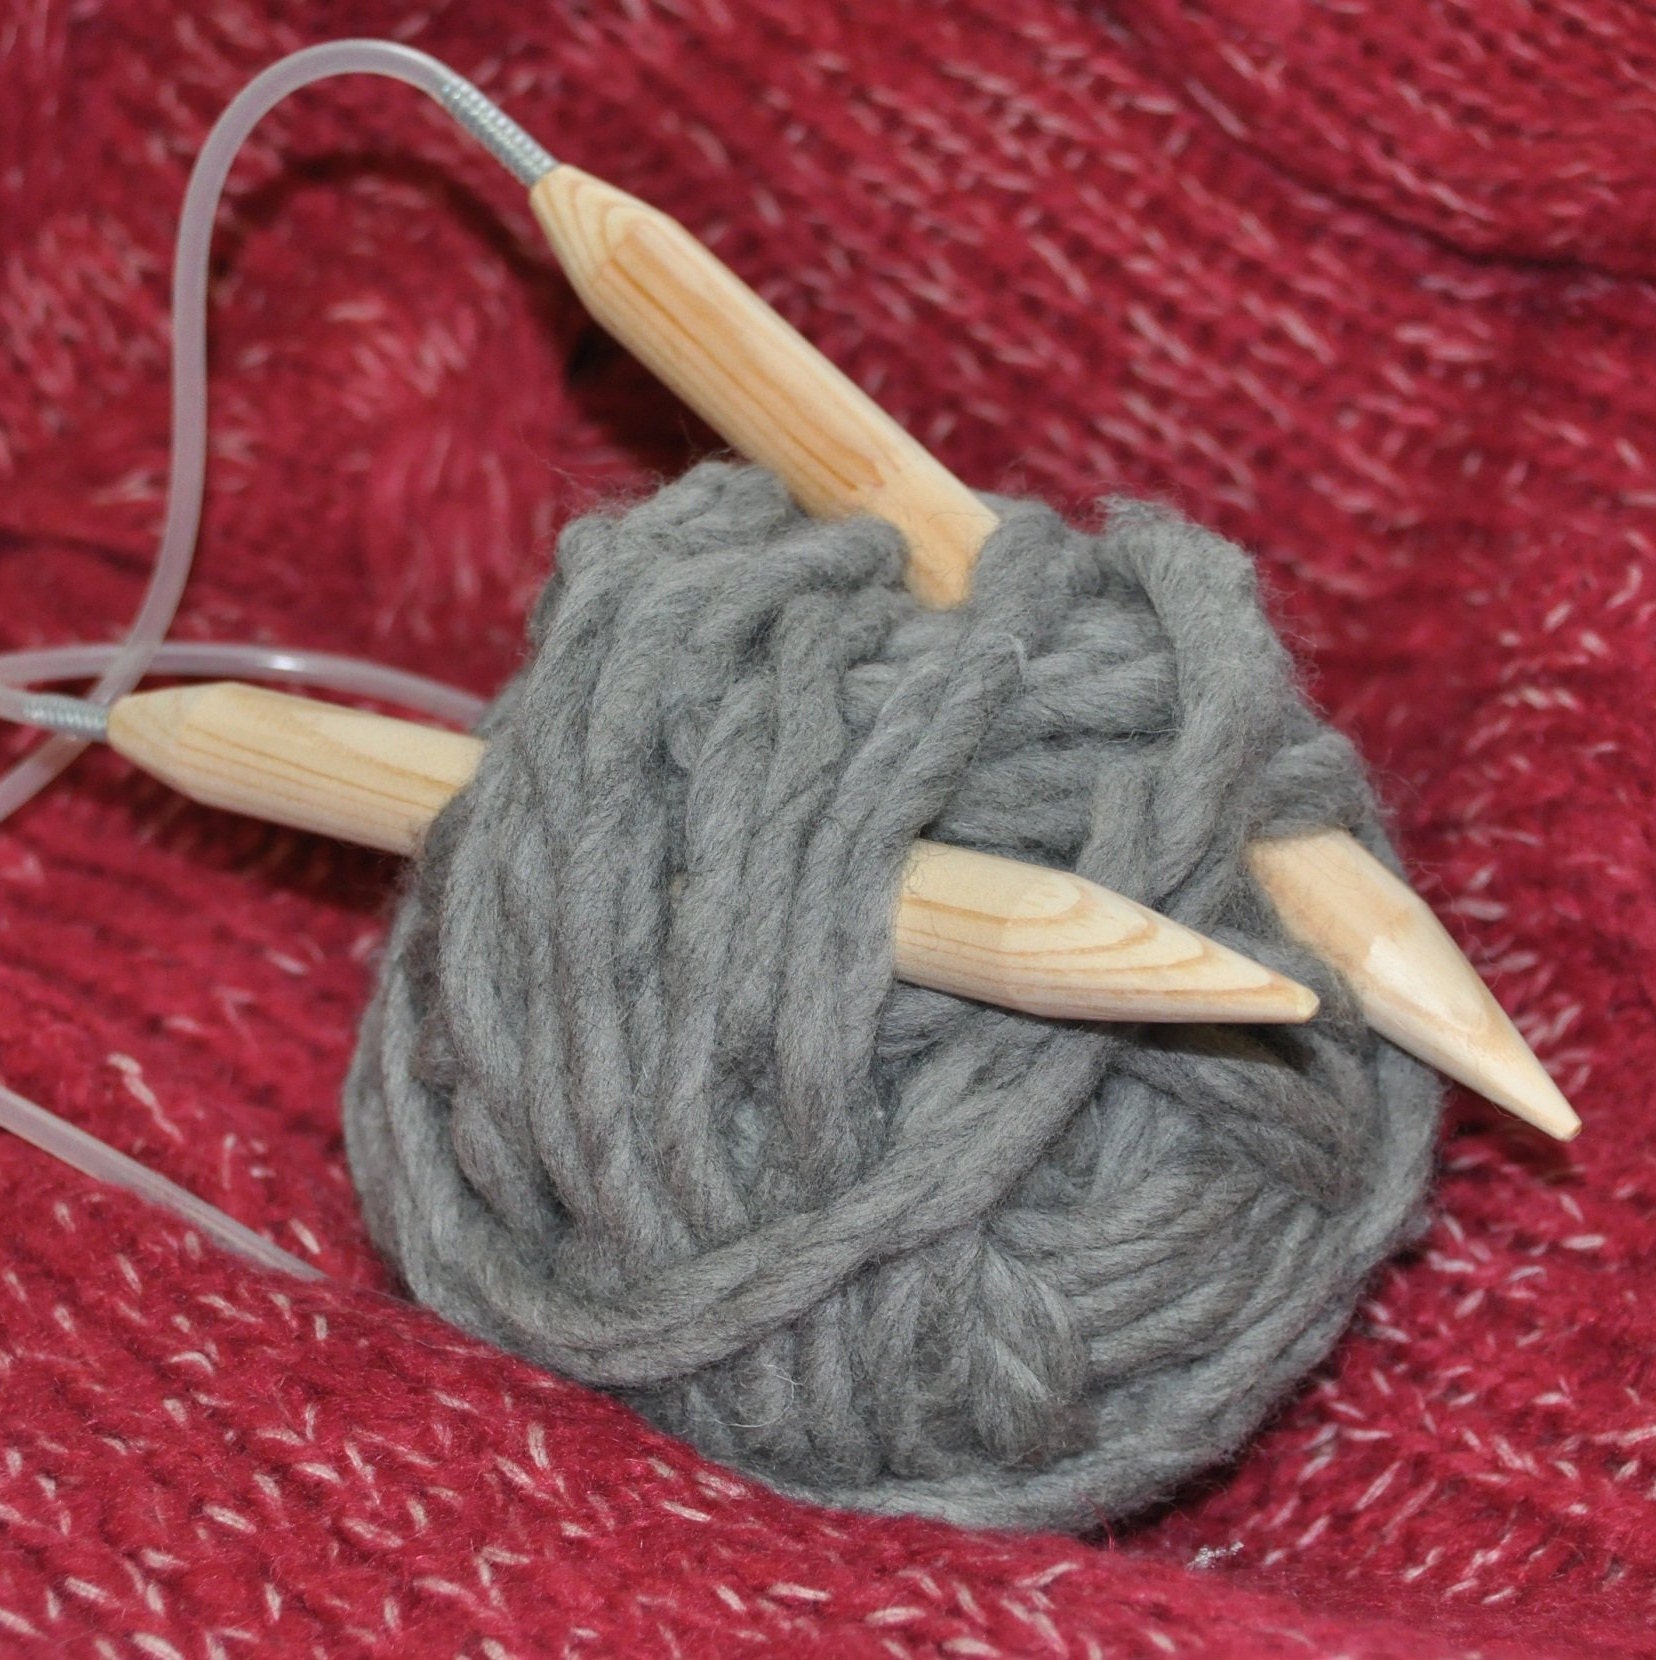 JubileeYarn Jumbo Large Wooden Circular Knitting Needles - 35mm - 40